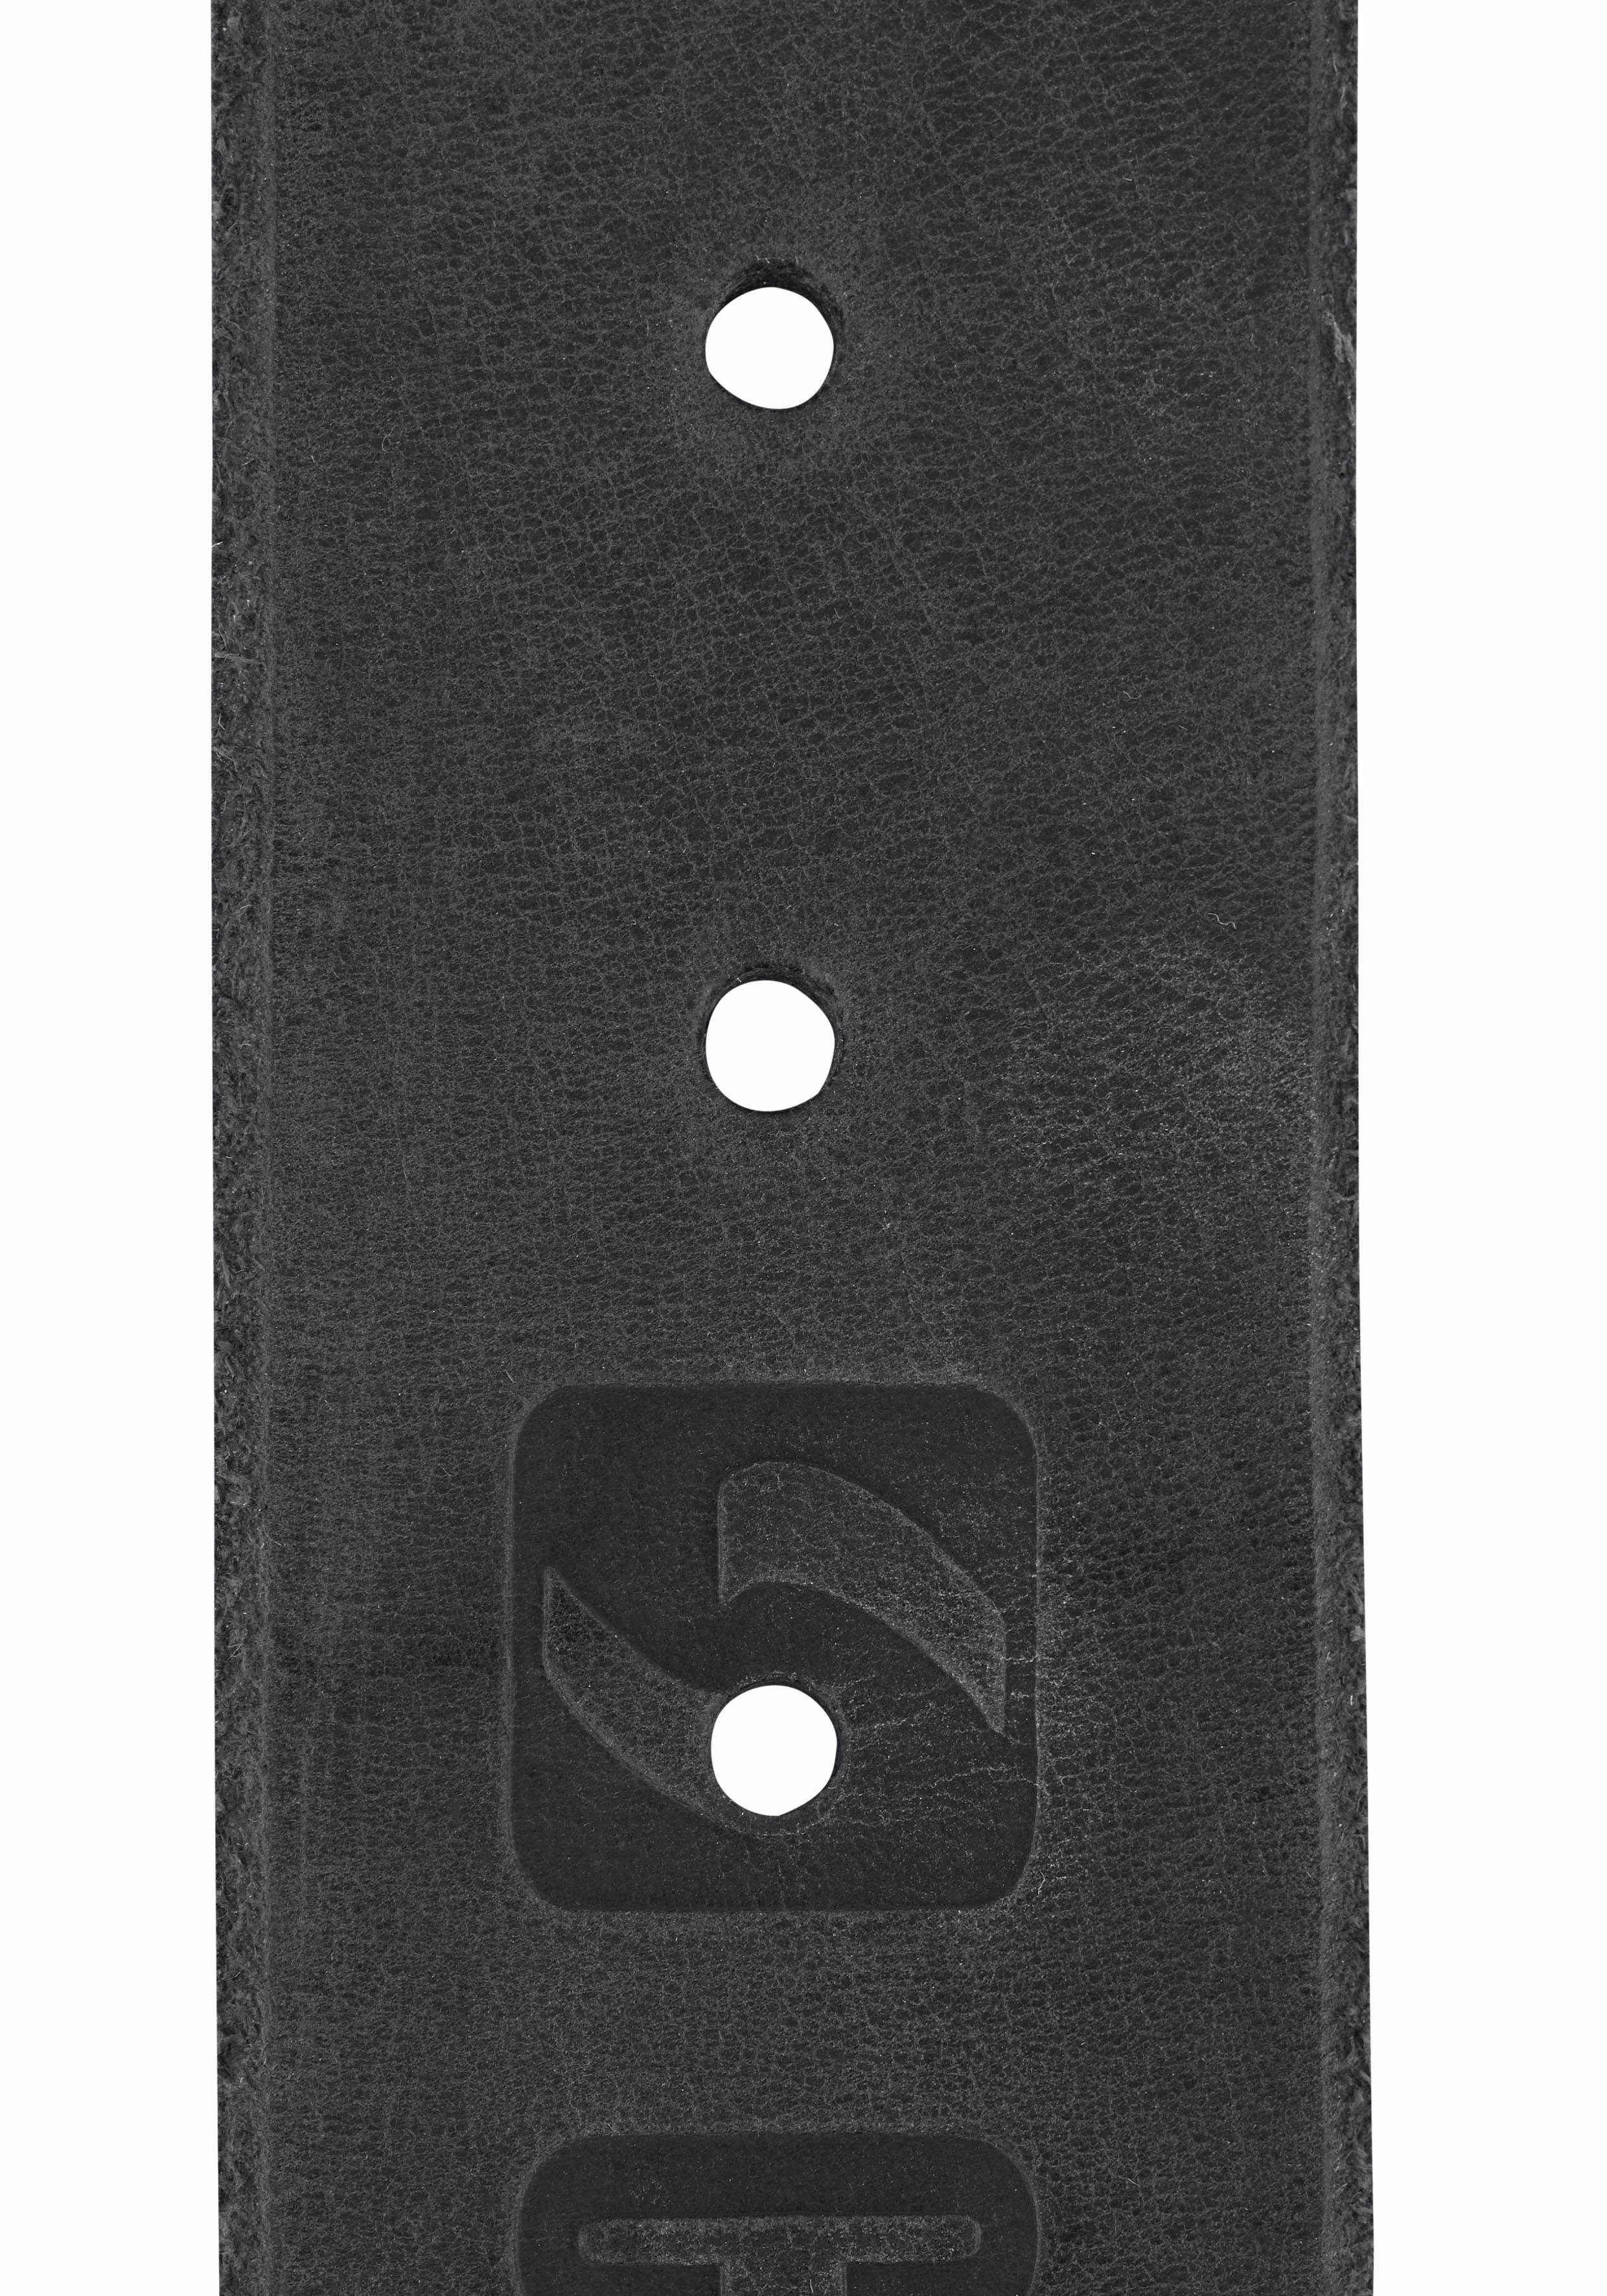 CAMP DAVID Ledergürtel Plakativer Used-Finish, Label mit schwarz Schriftzug